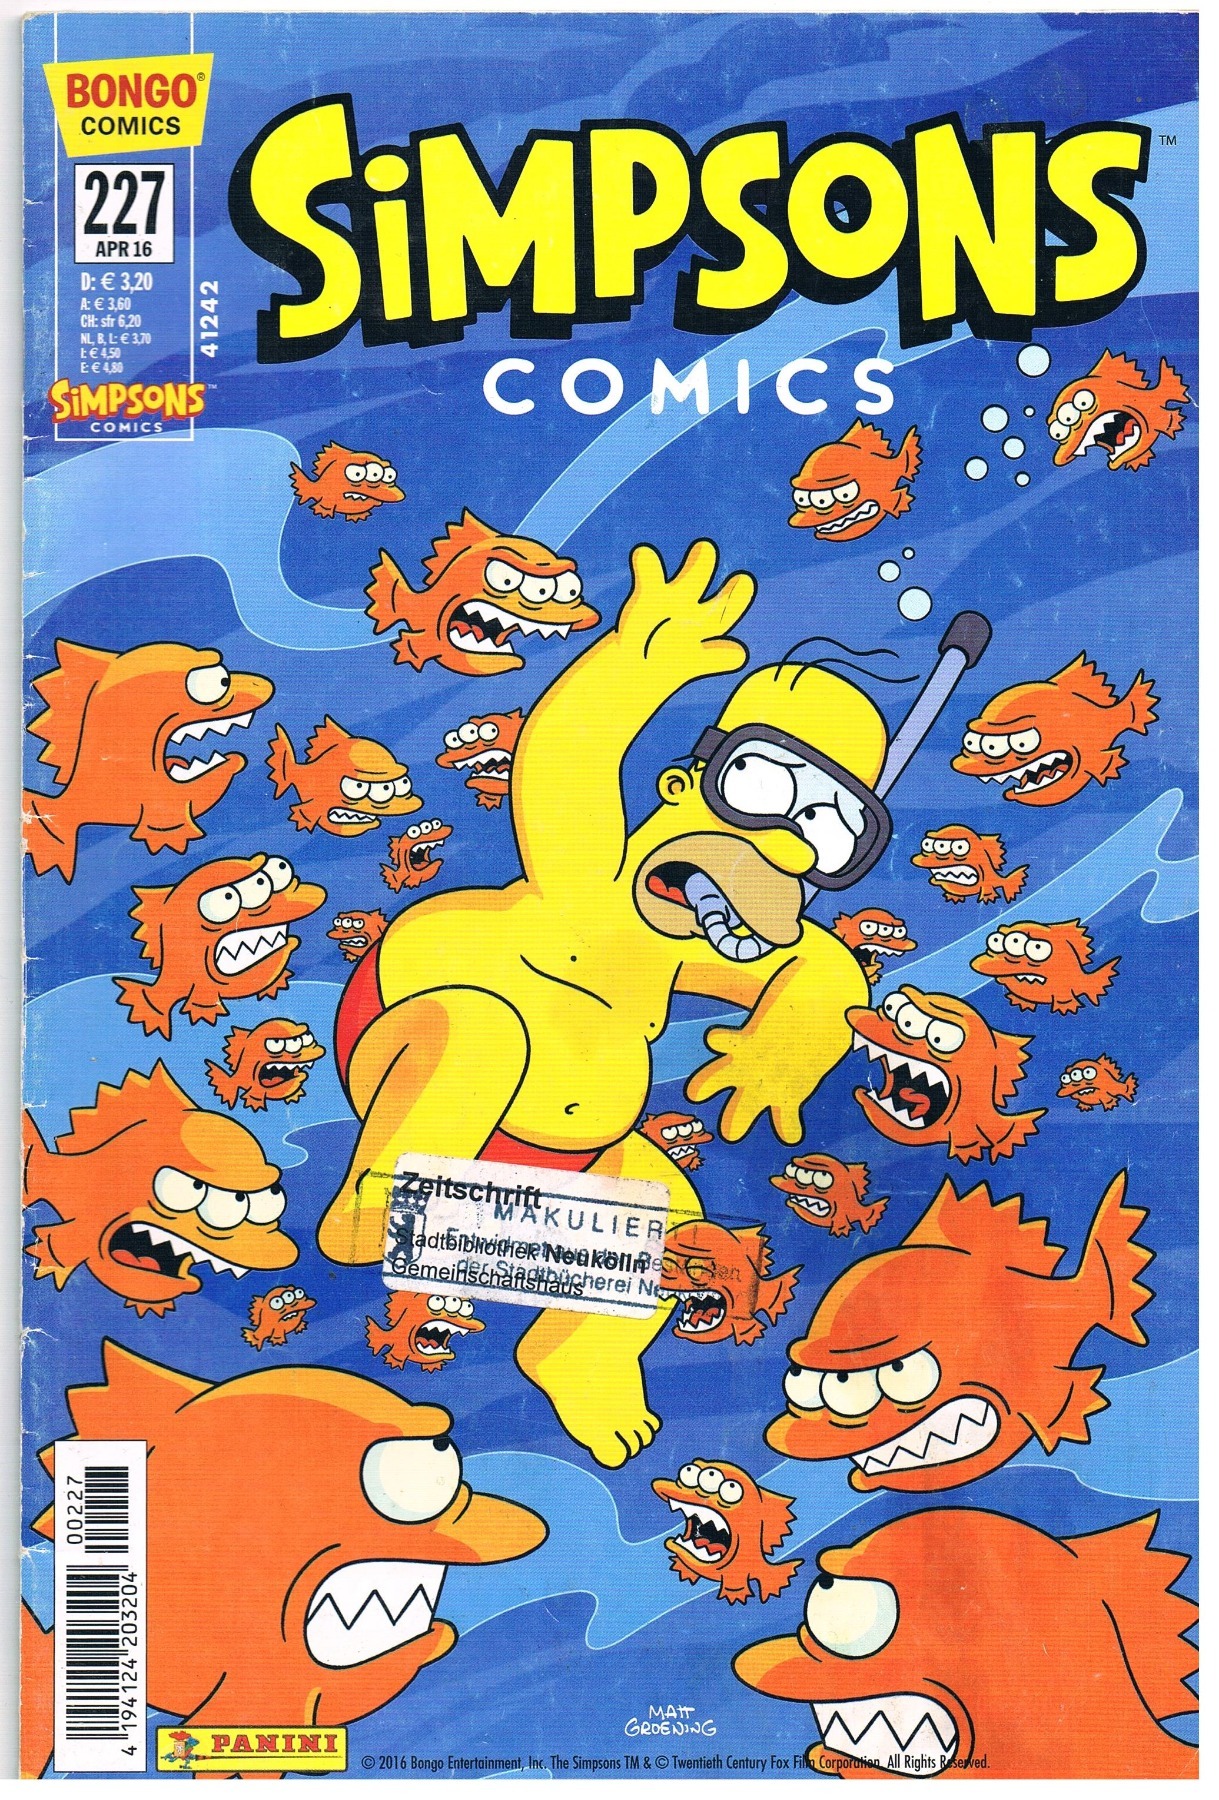 Simpsons Comics - Issue 227 - Apr 16 2016